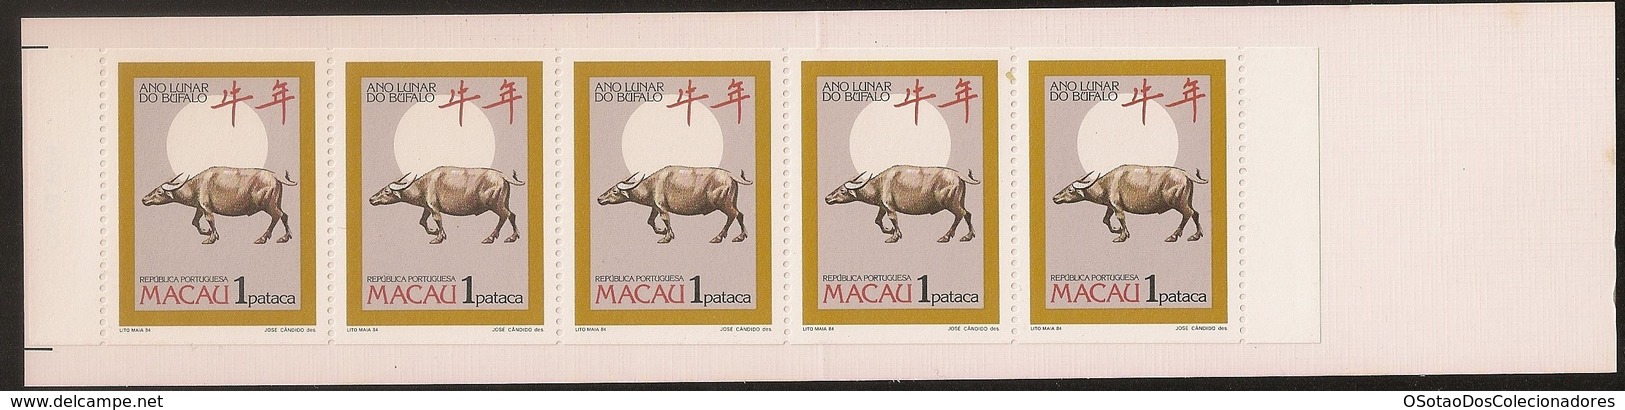 Macau Macao Chine Caderneta 1985 - Ano Lunar Do Bufalo - Chinese New Year - Year Of The Ox - MNH/Neuf - Carnets